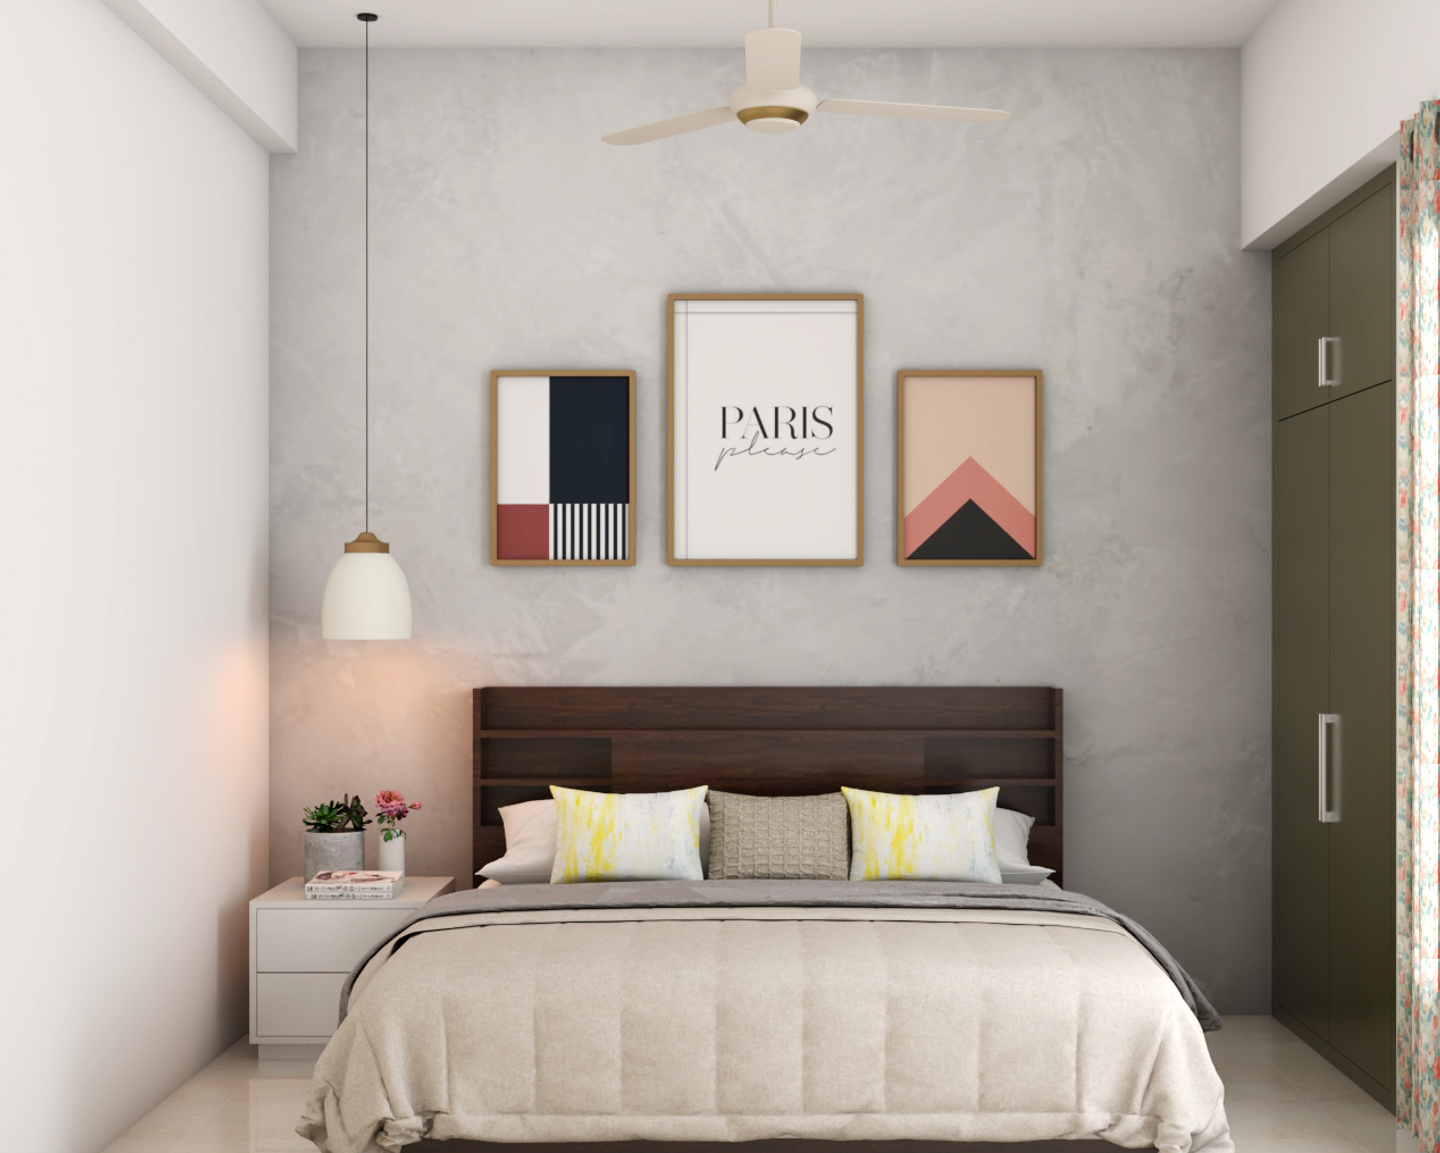 Modern Guest Bedroom Design For Rental Properties - Livspace